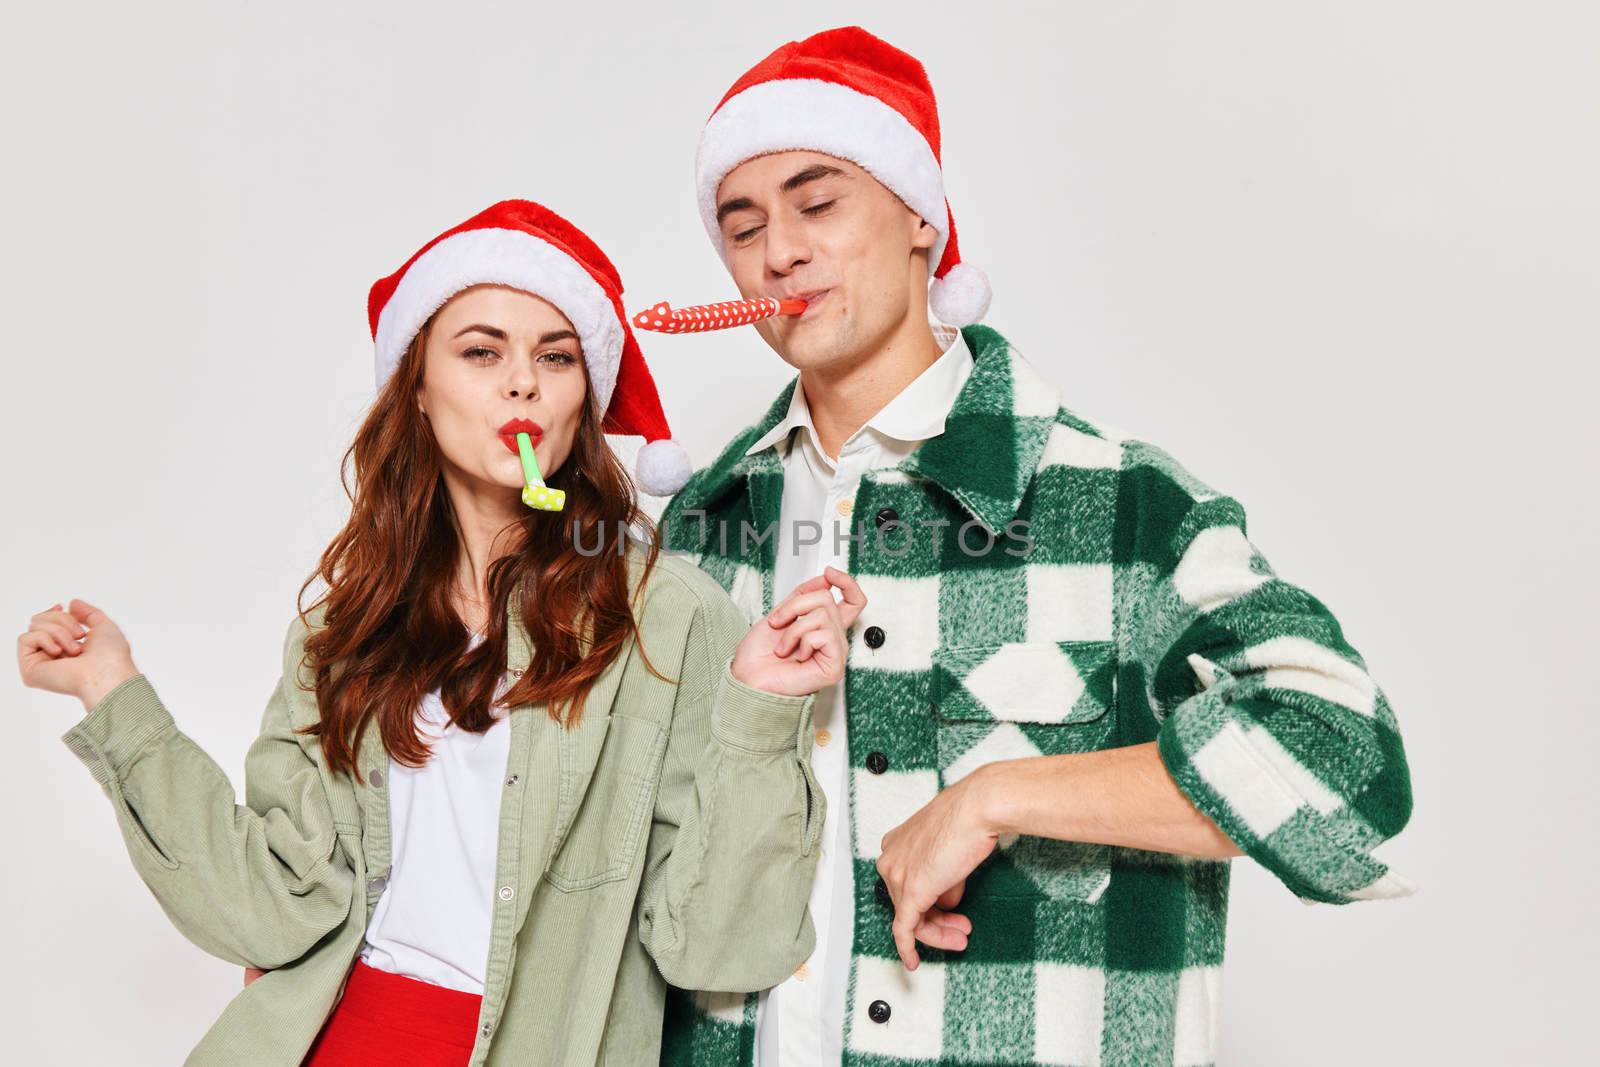 Man and woman festive mood fun friendship fashion lifestyle by SHOTPRIME